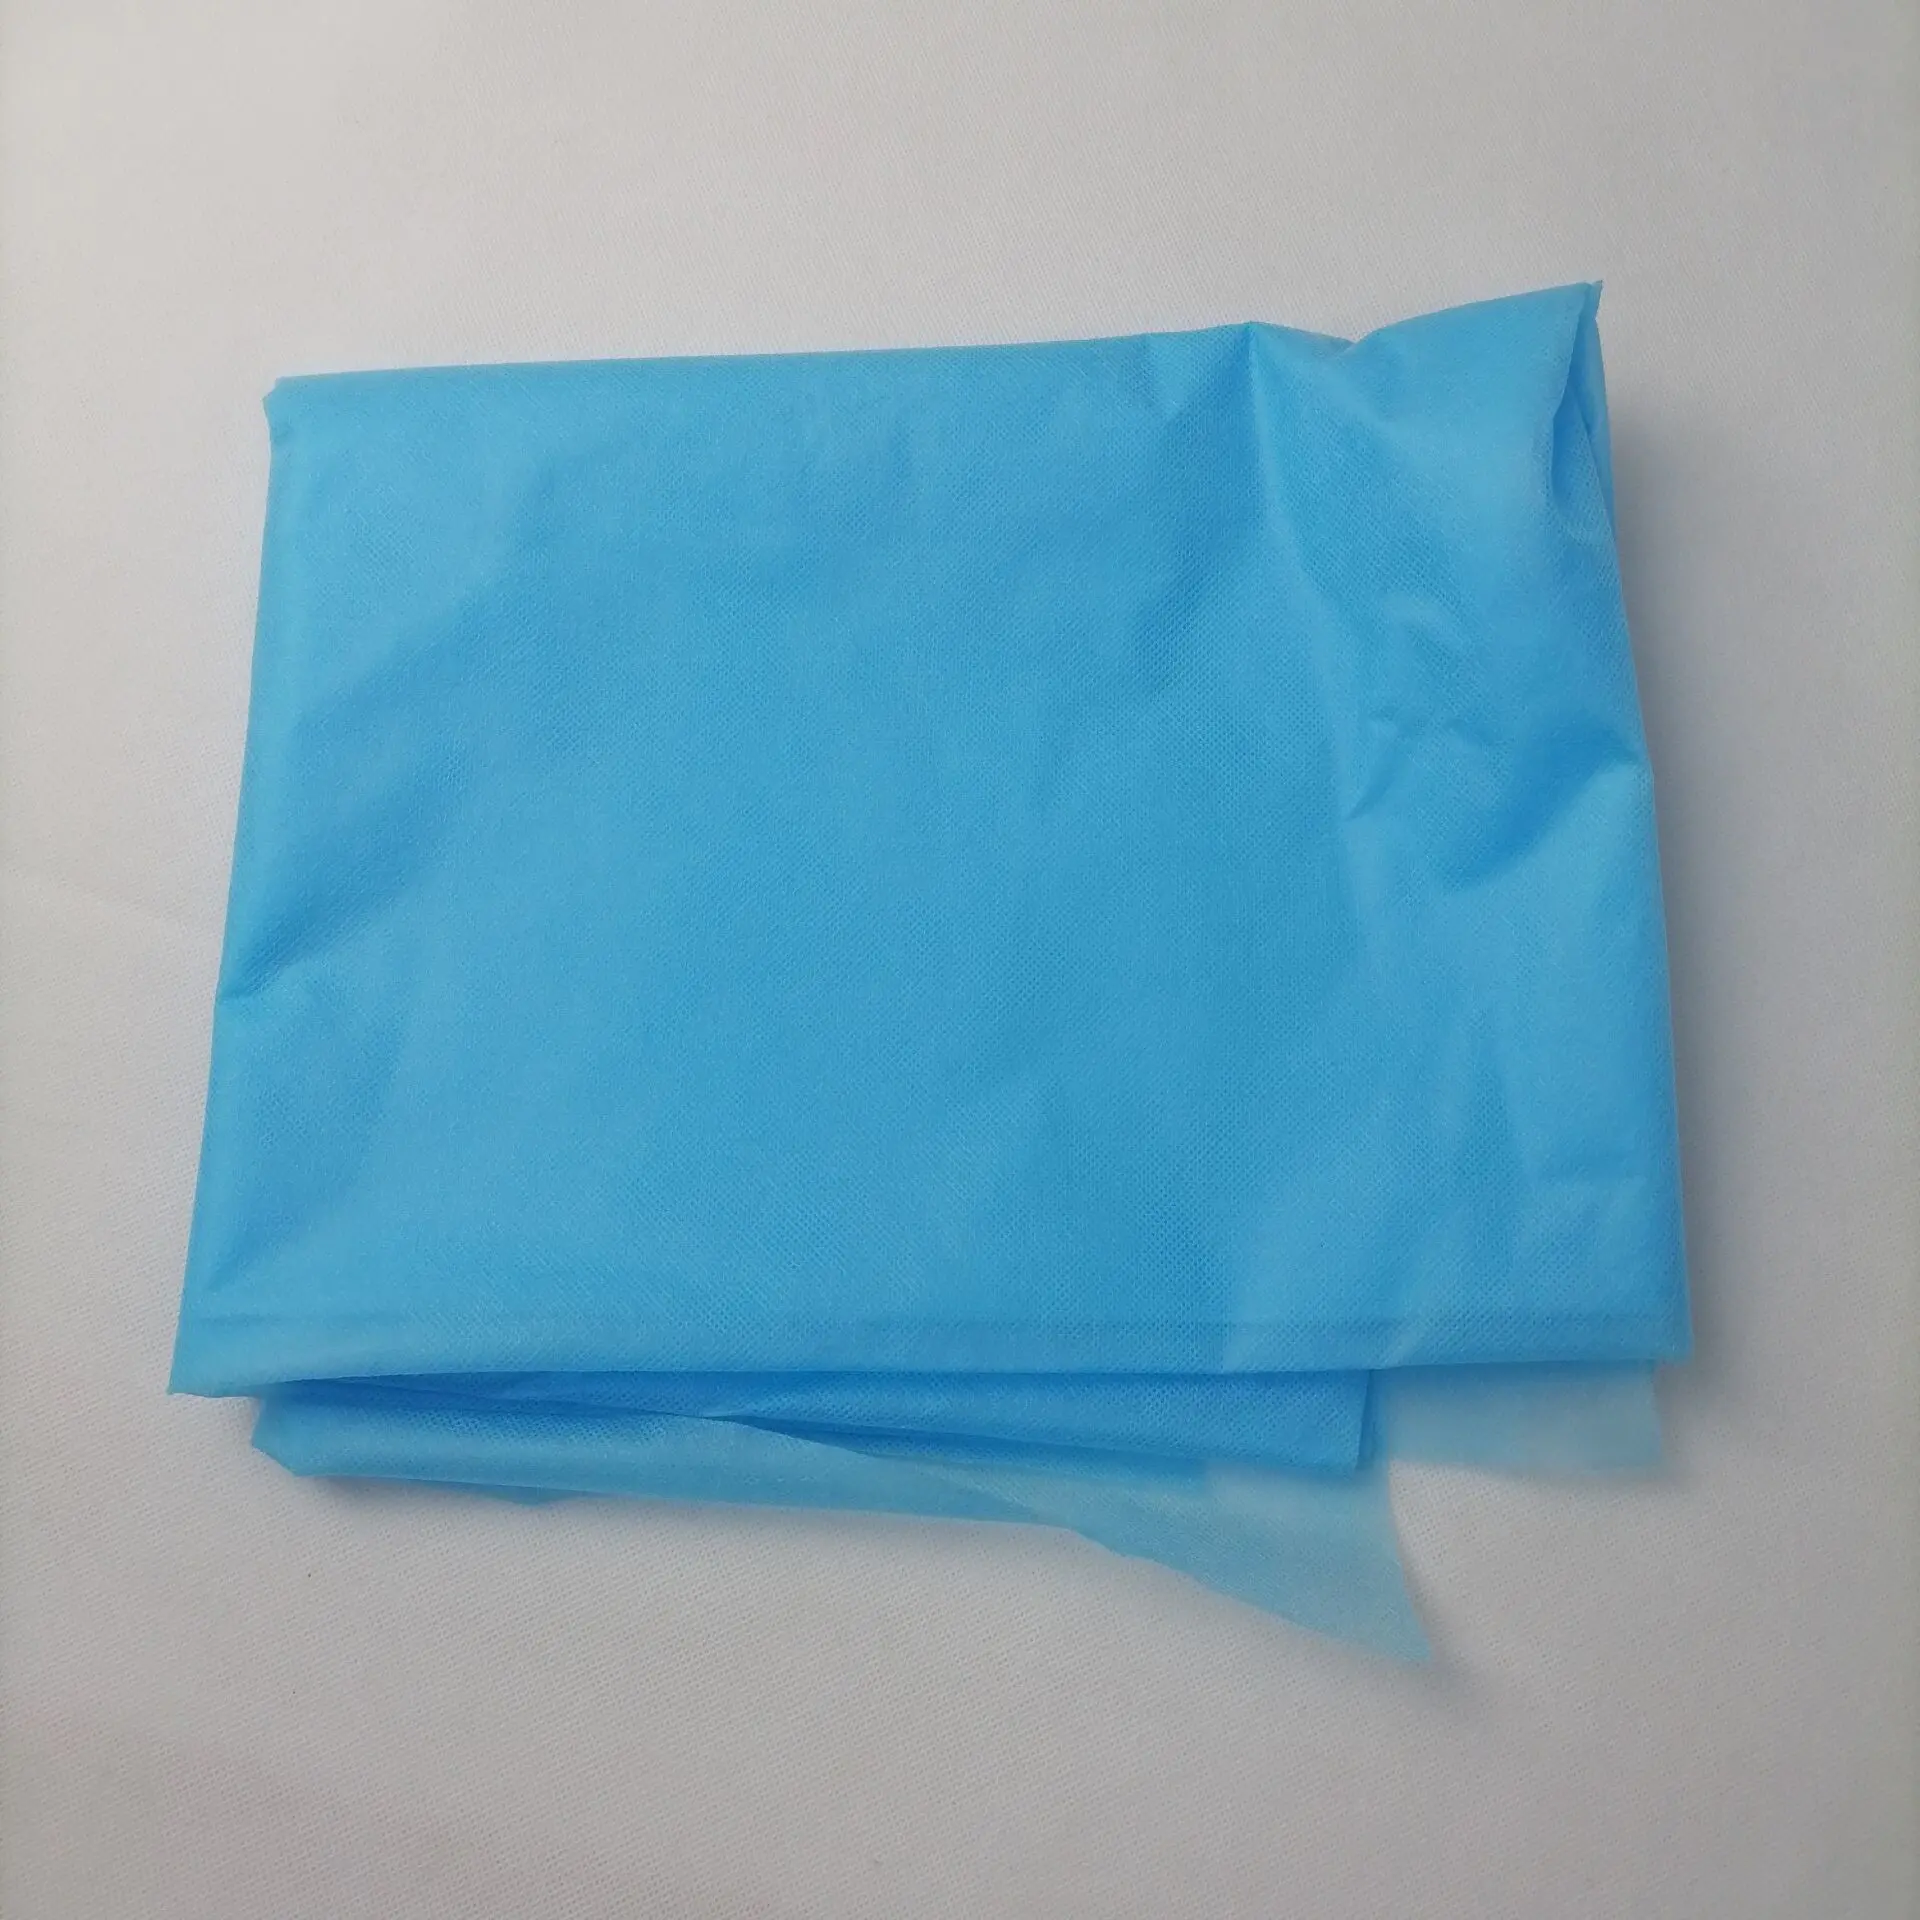 China polypropylene spunbon nonwoven fabric for making masks